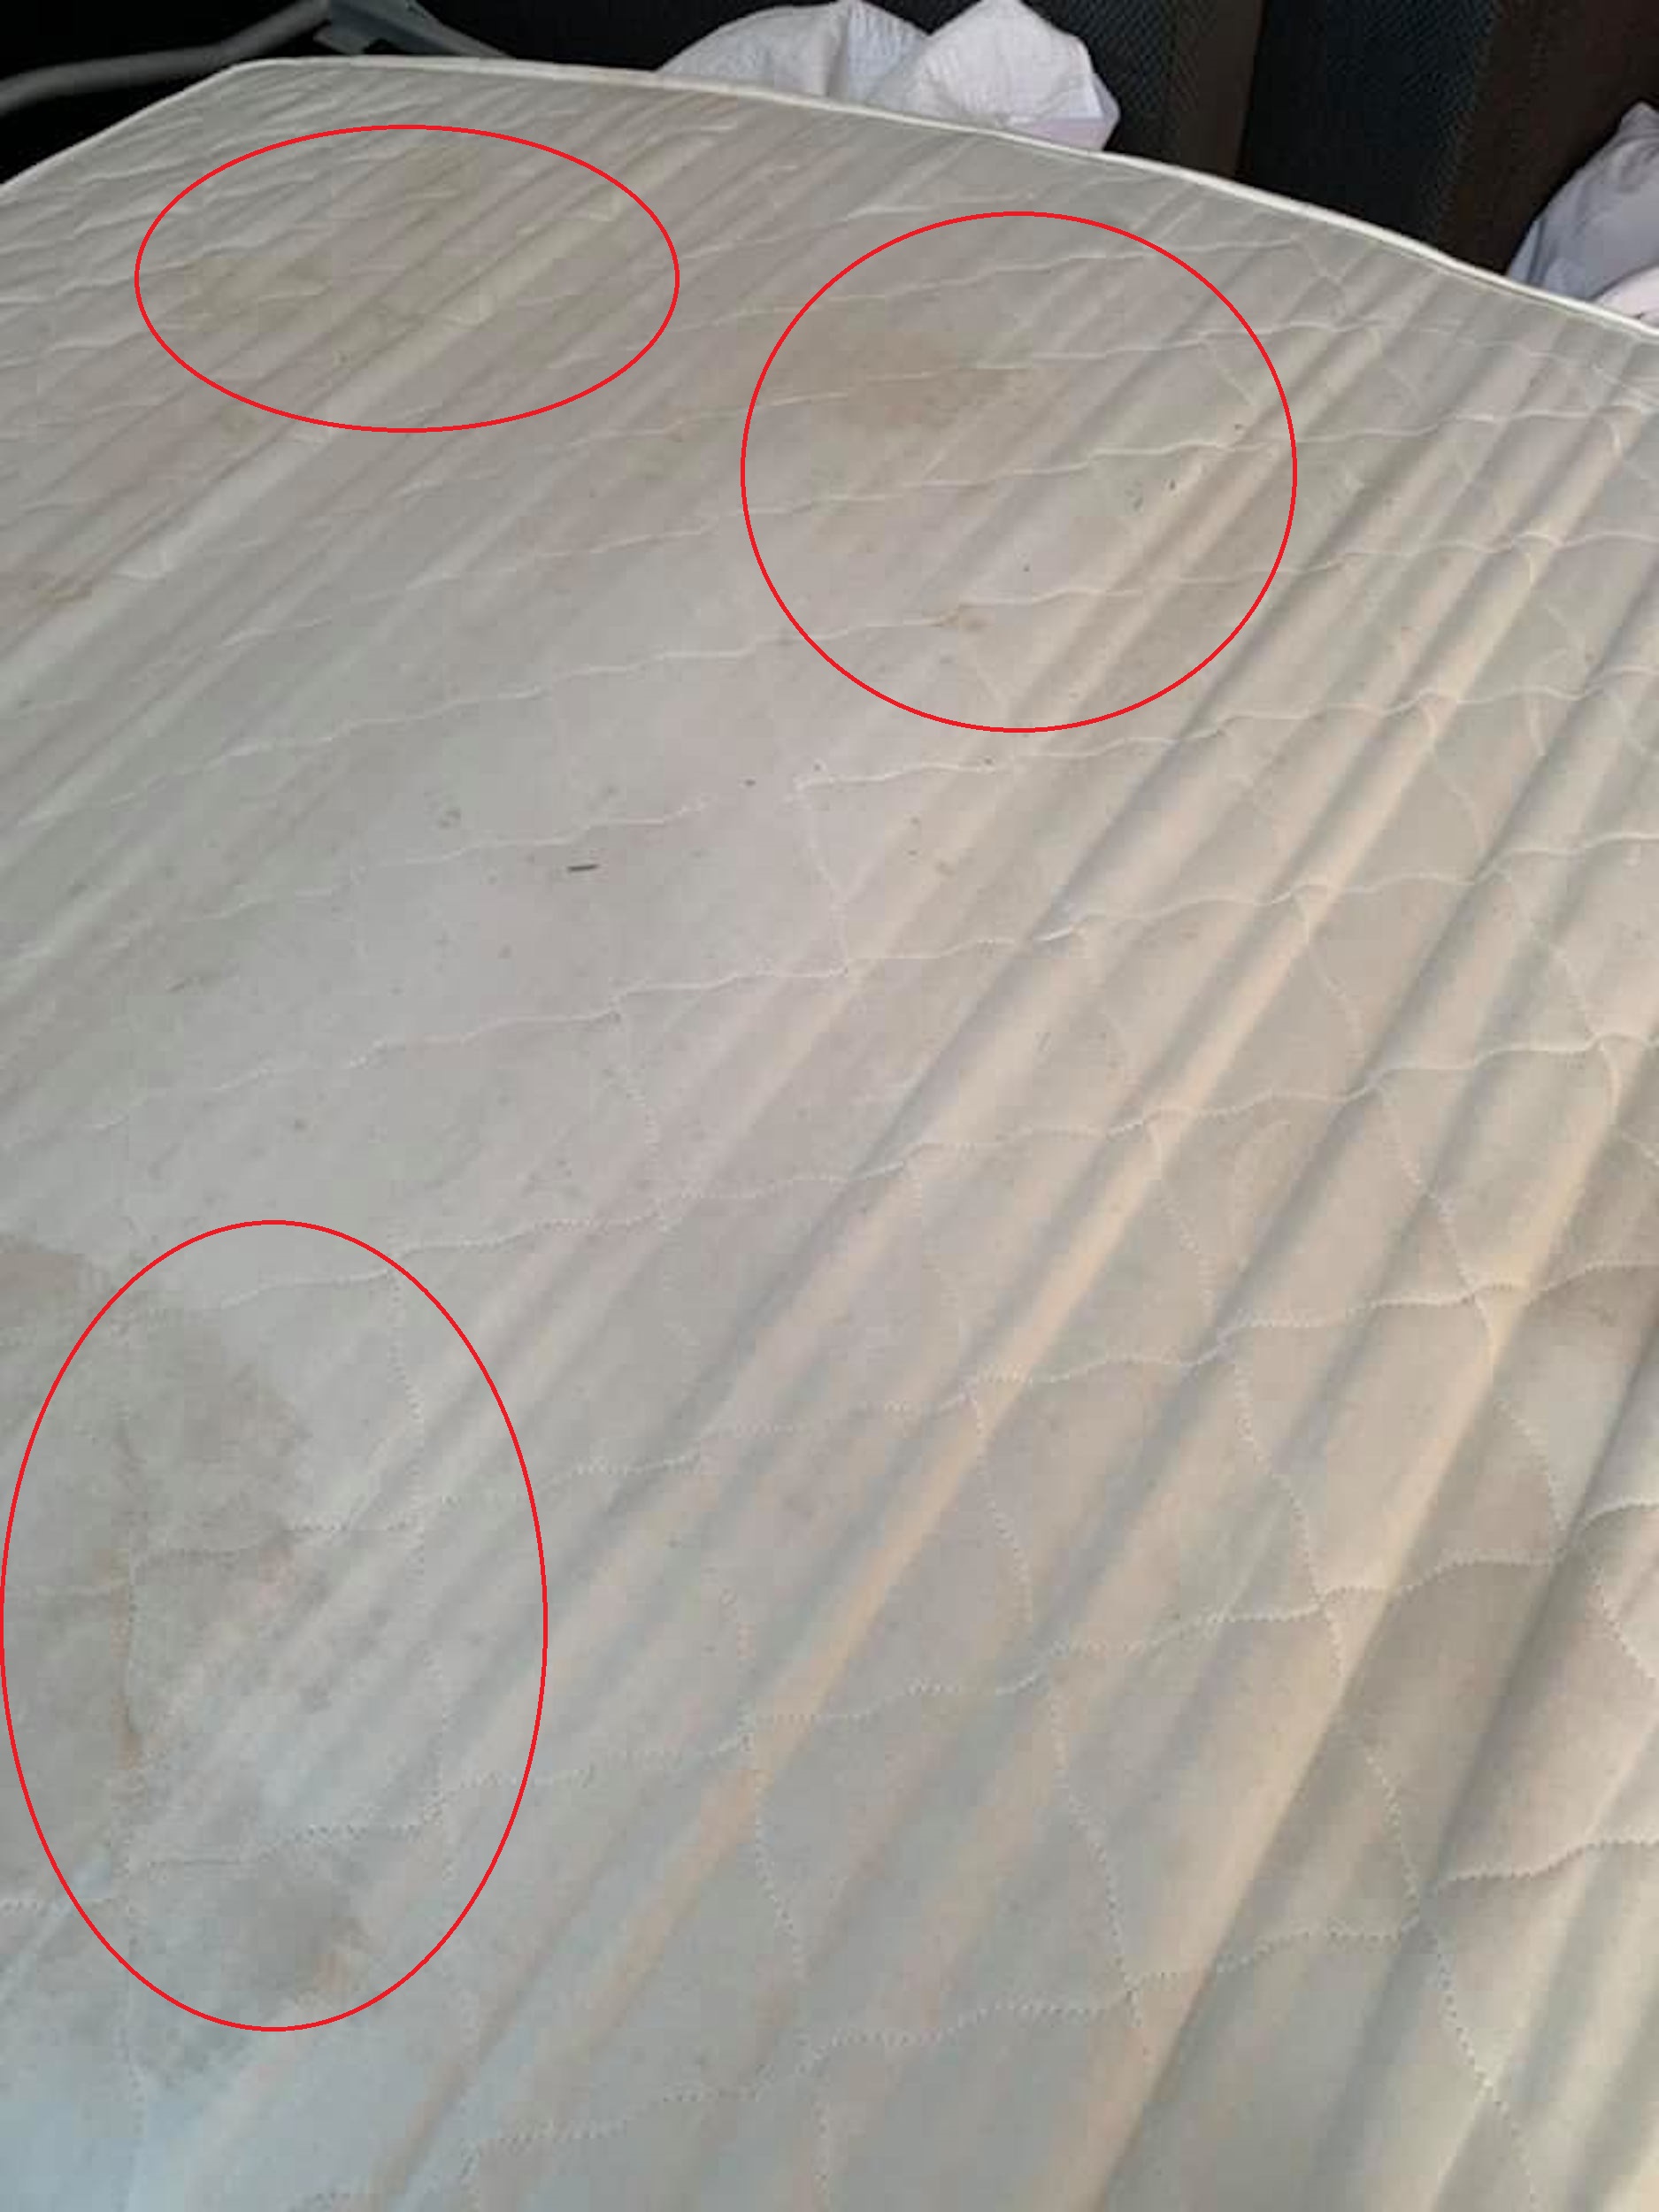 stains on mattress